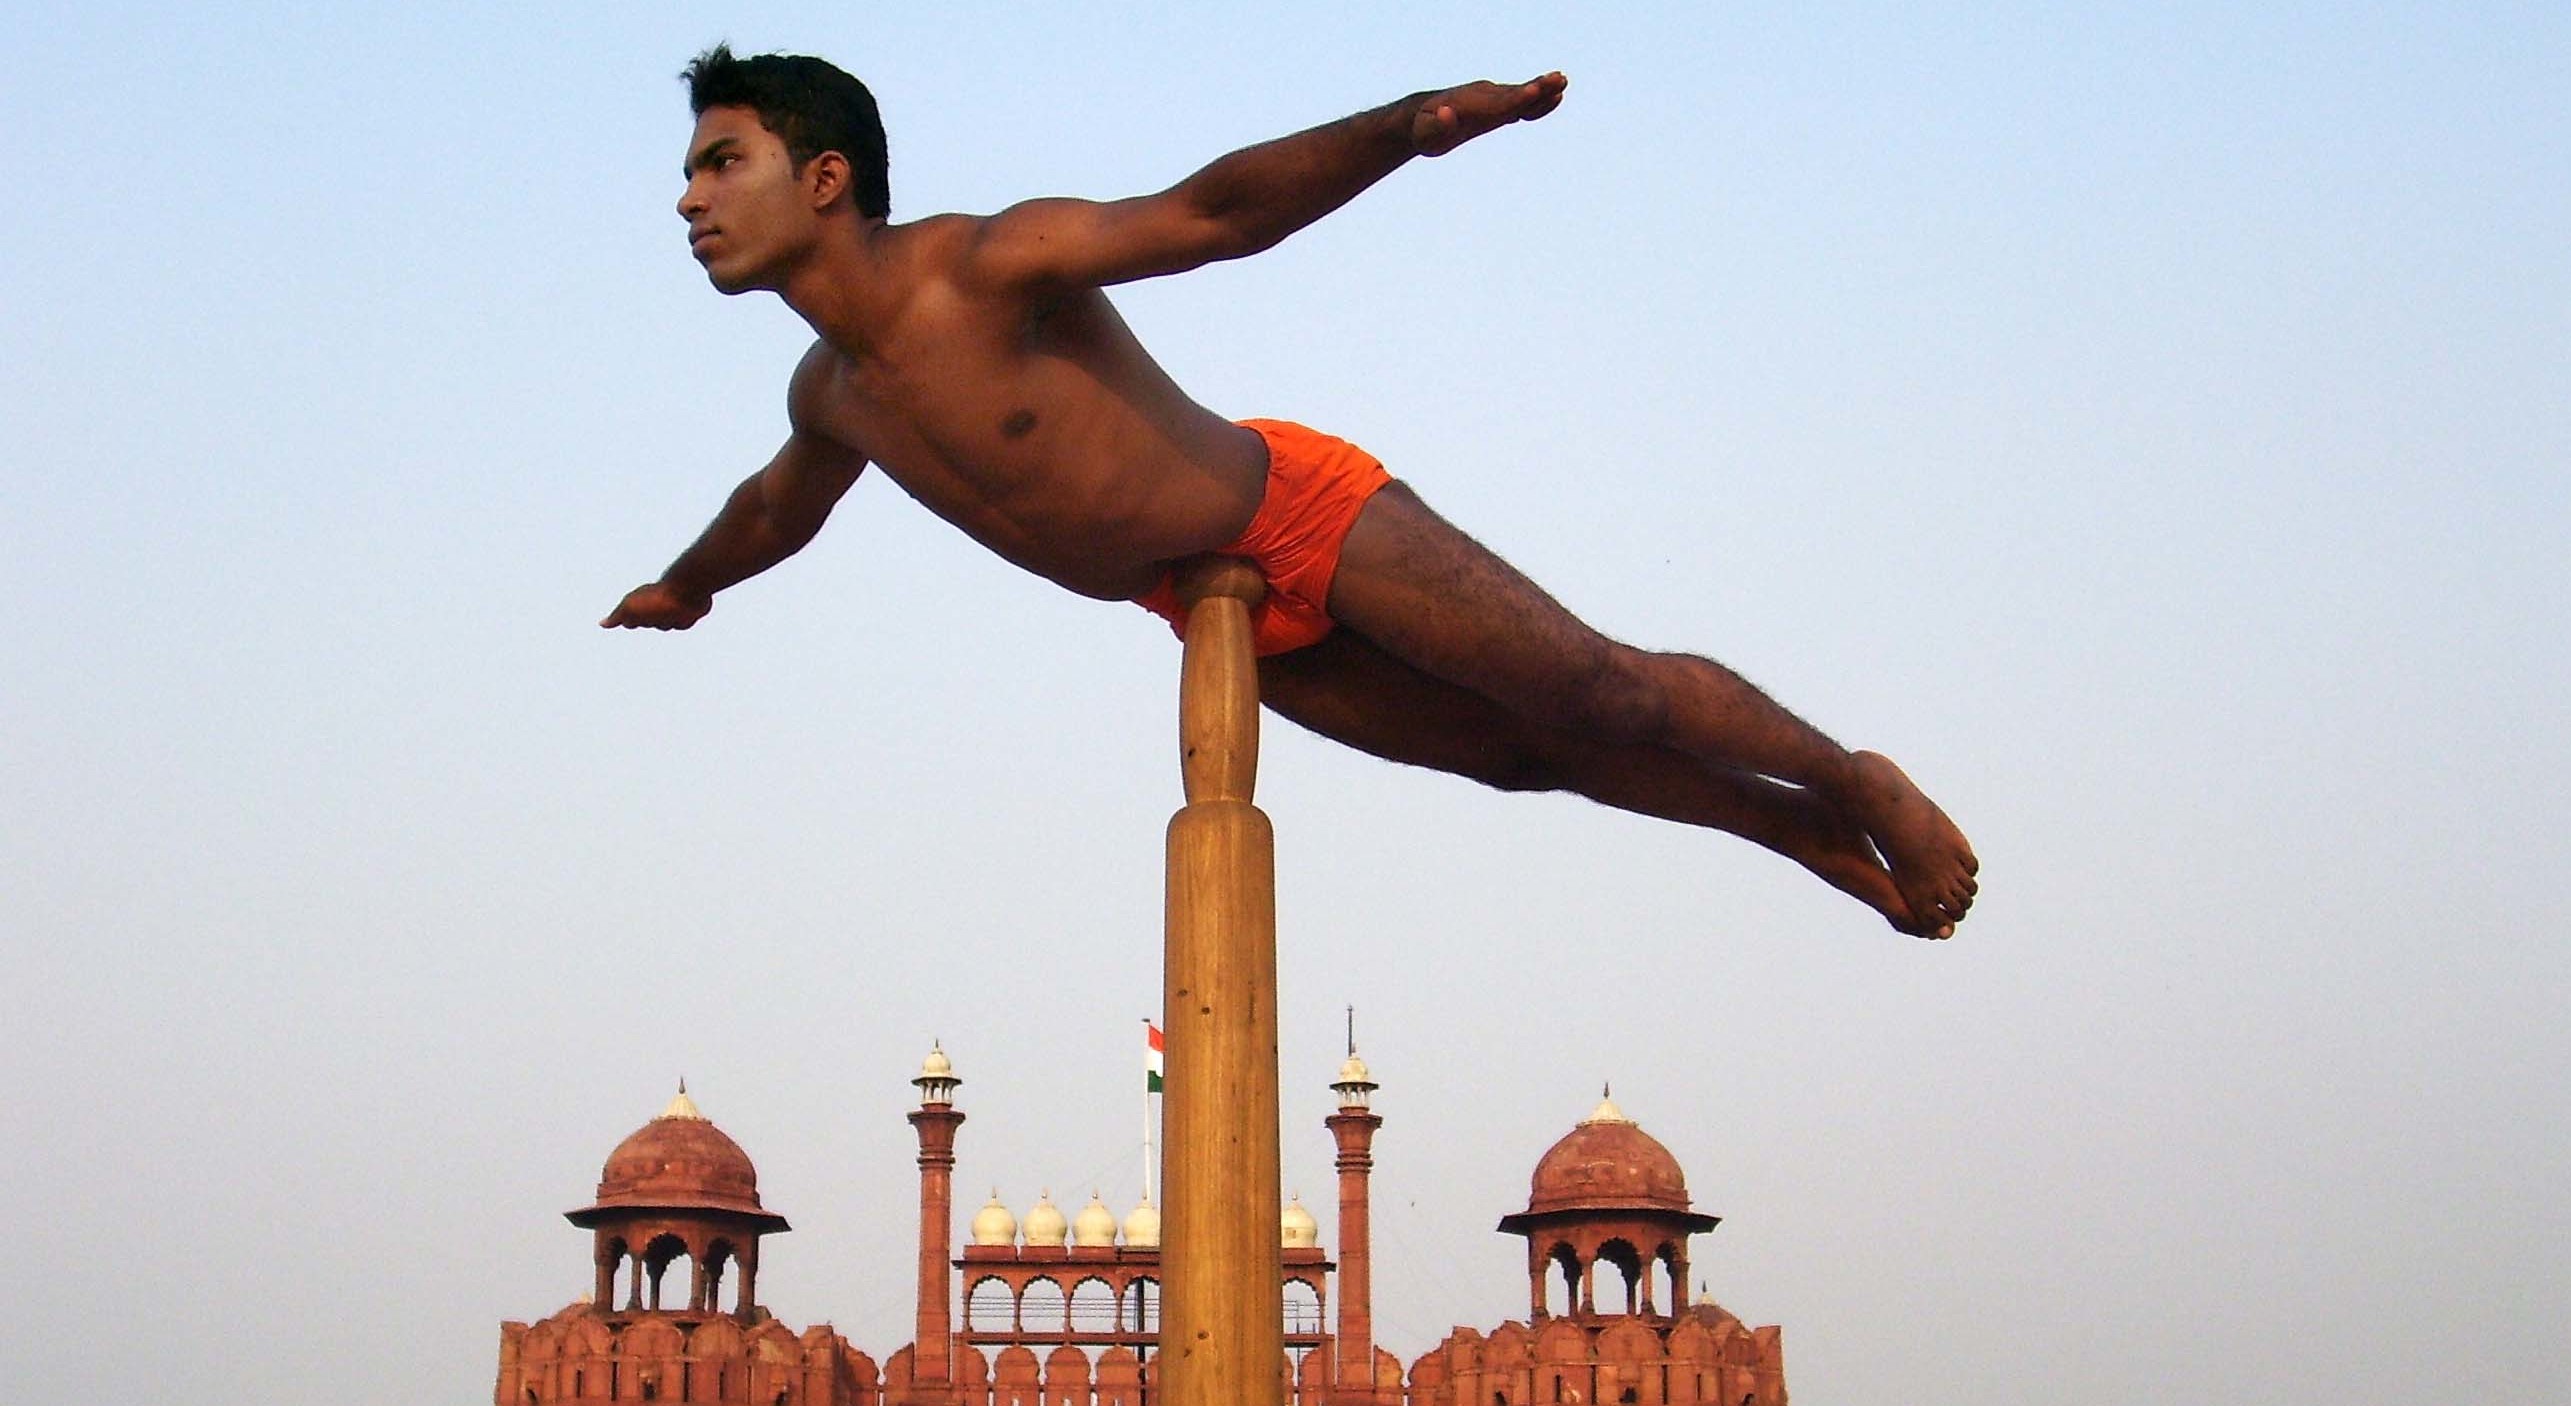 Indian malaysian tamil boy naked